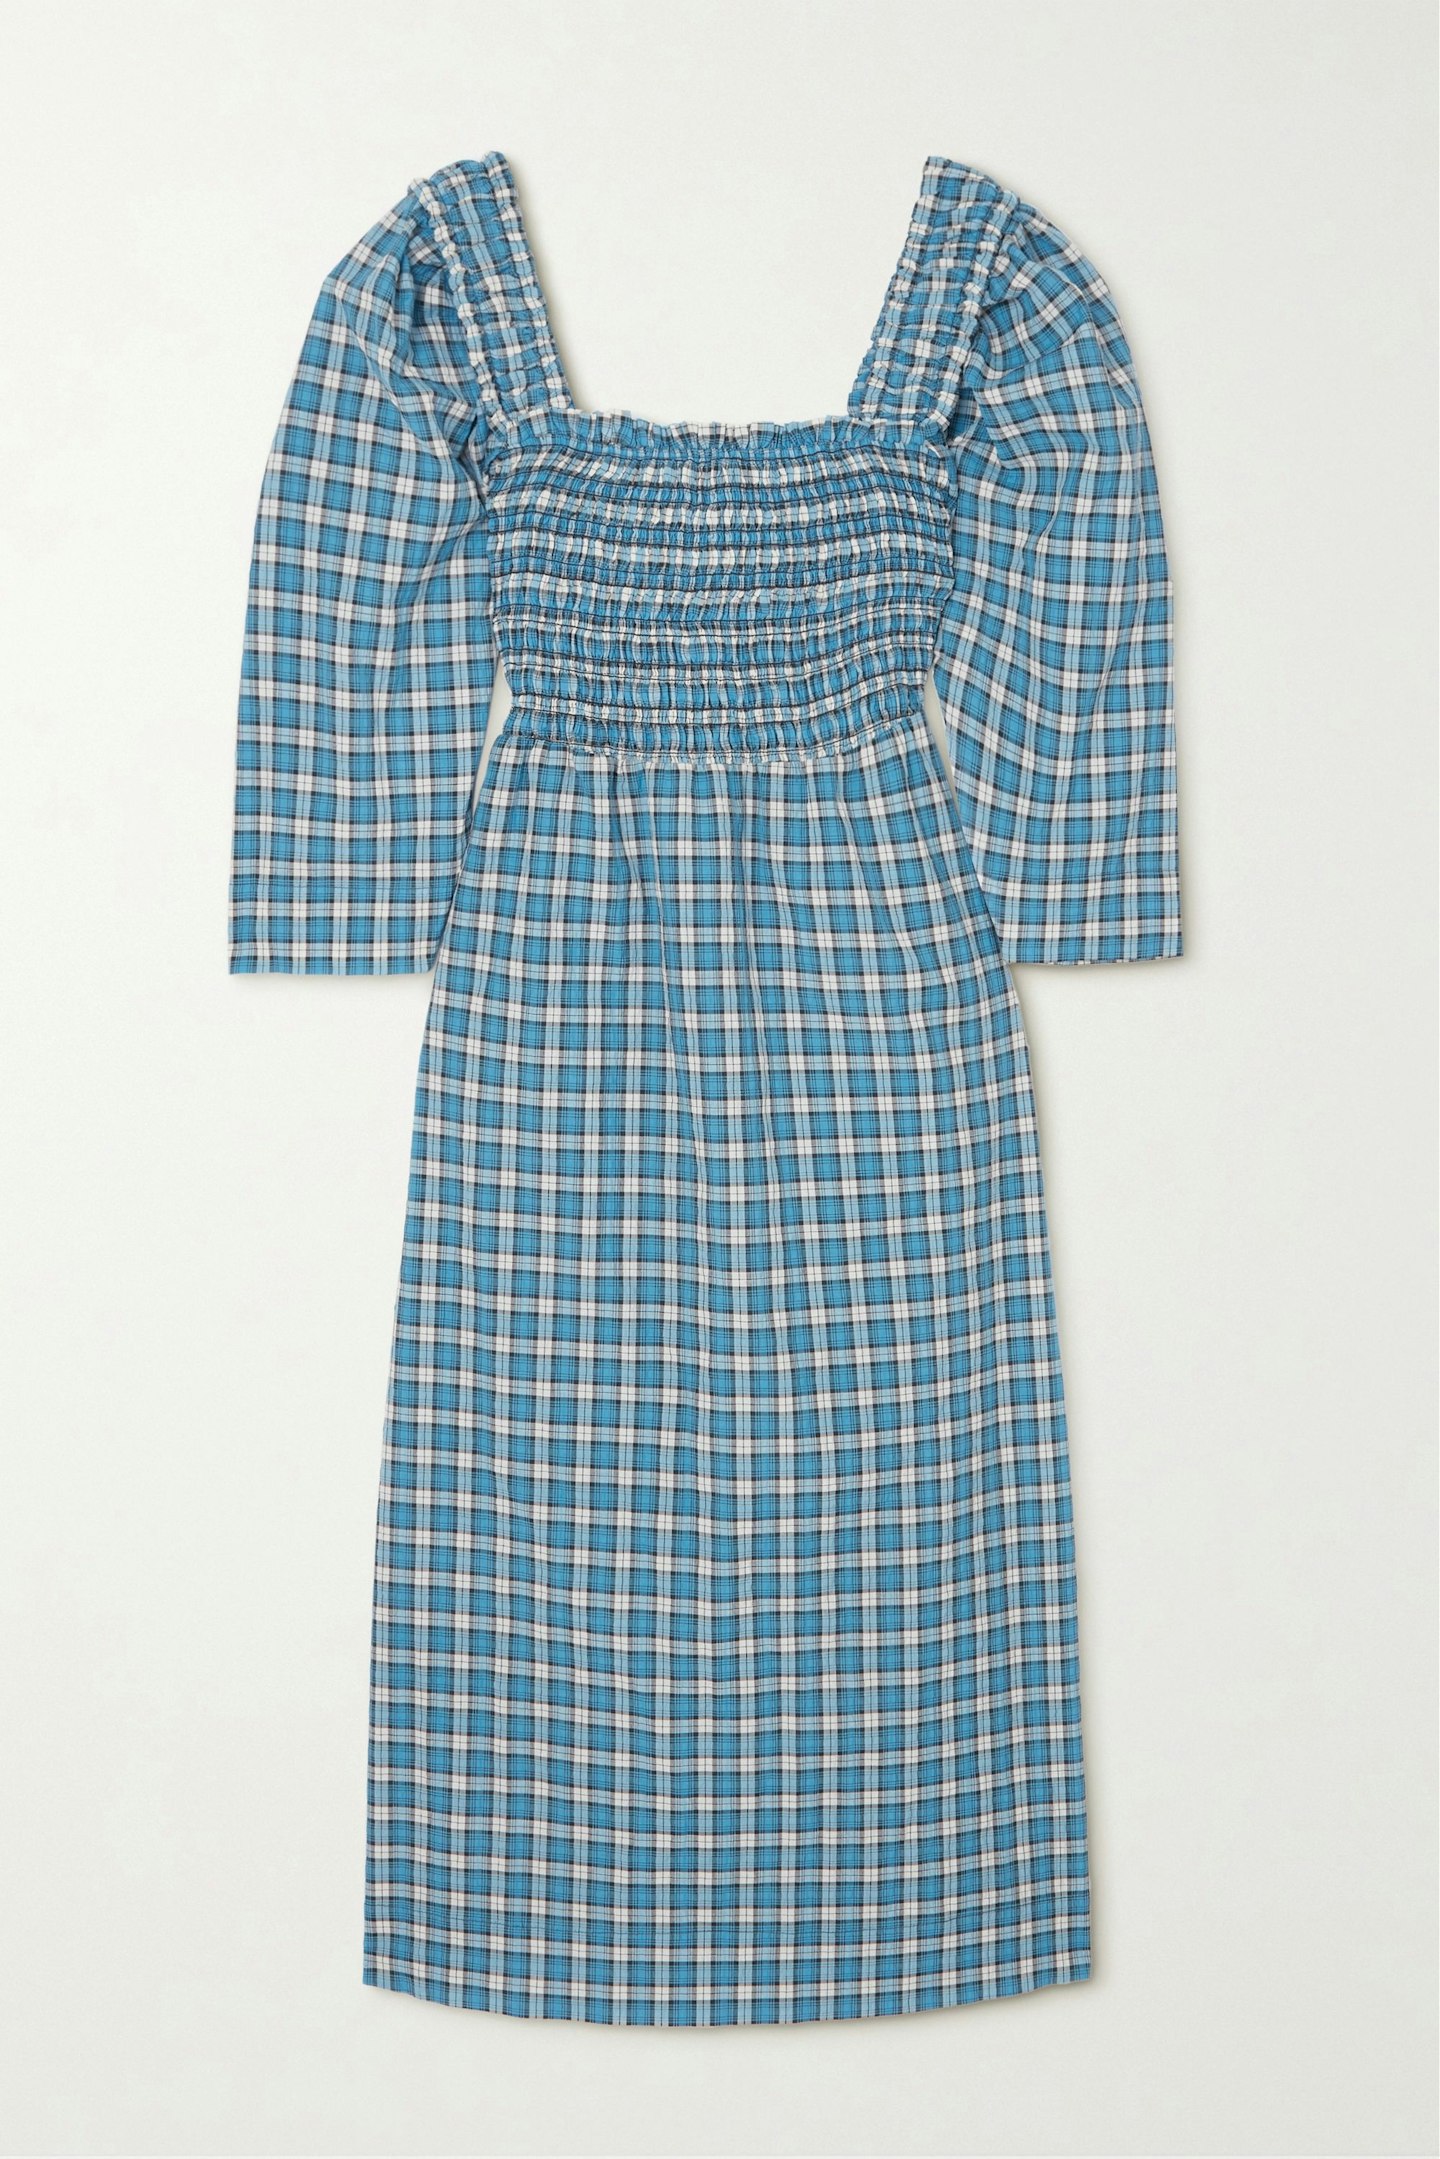 jubilee dresses Ganni, Smocked Cotton Organic Cotton Blend Seersucker Midi Dress, £225